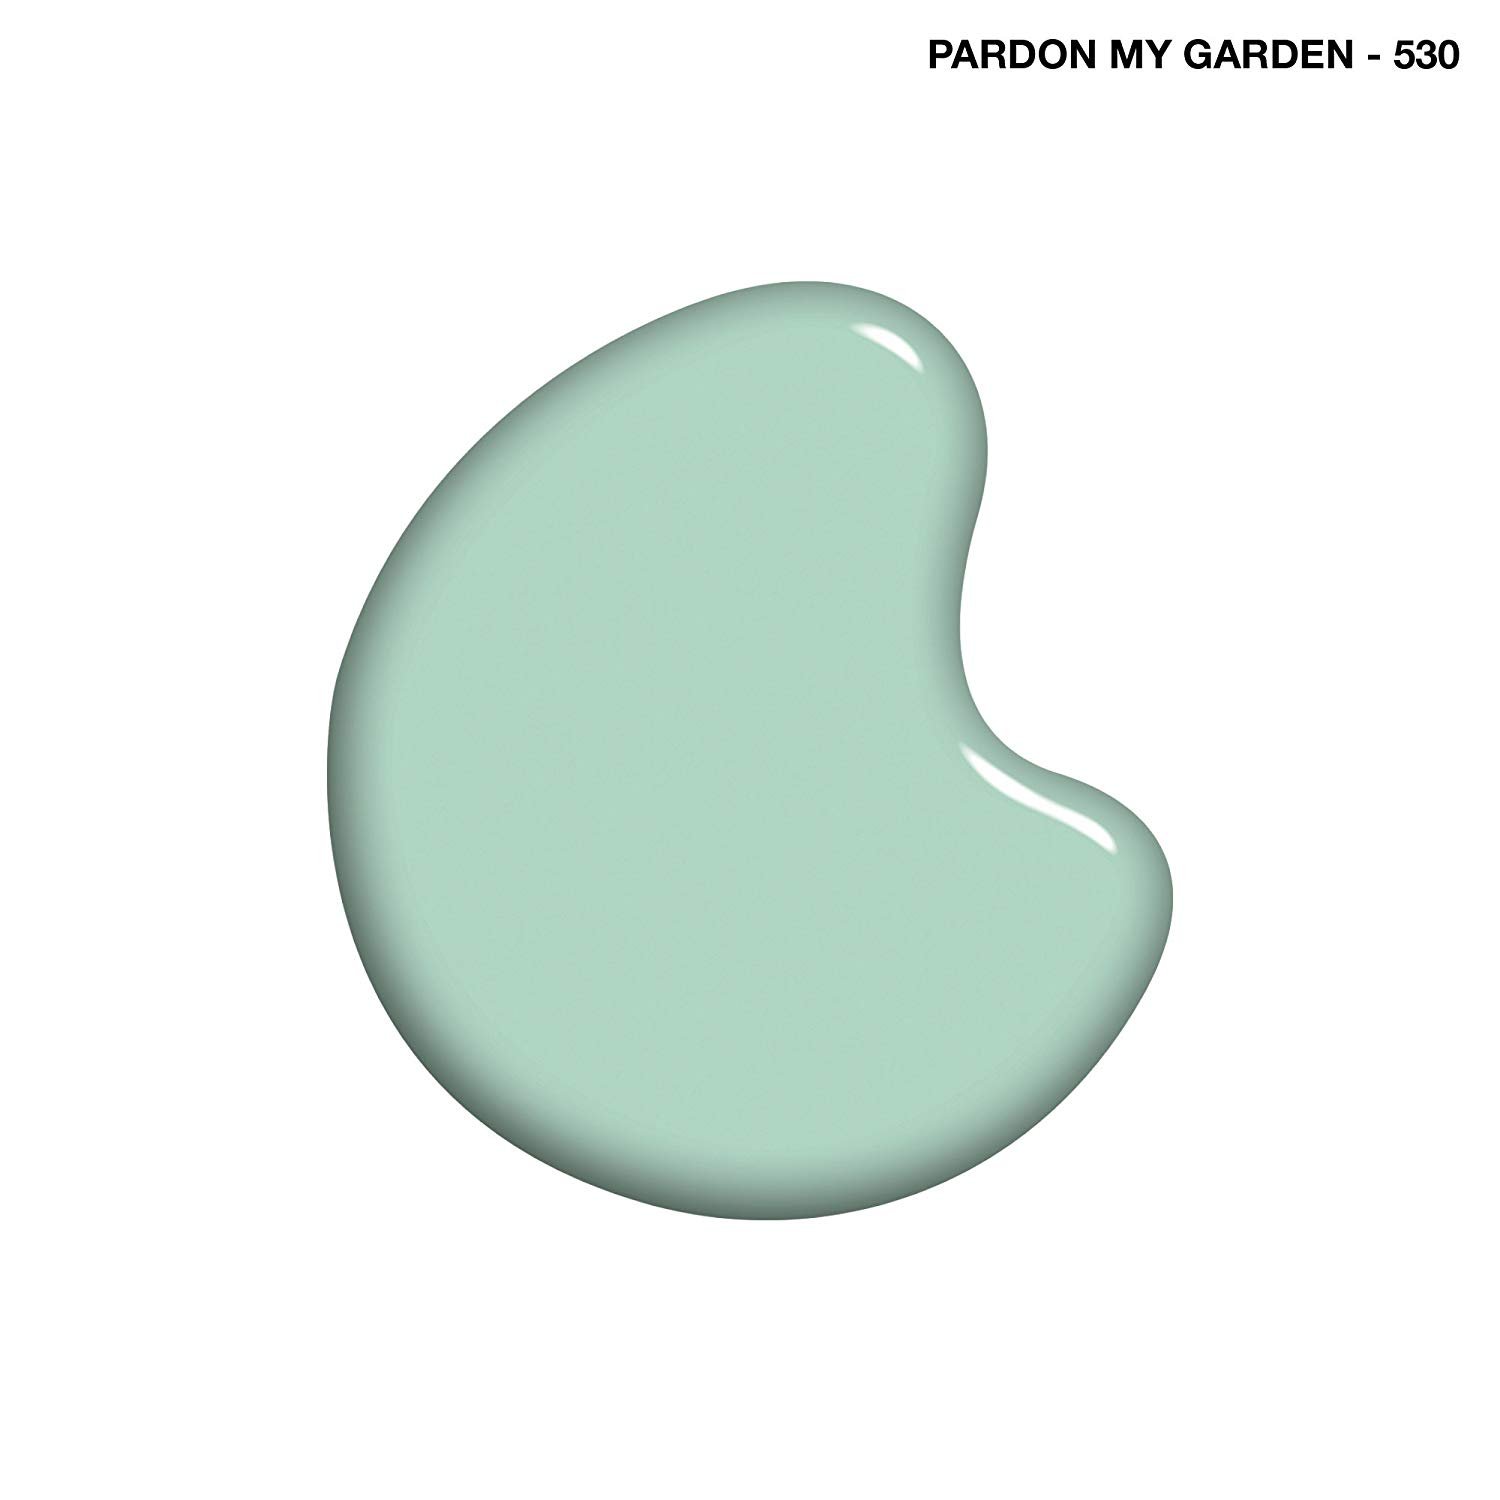 Sally Hansen Complete Salon Manicure Nail Polish, Pardon My Garden - image 4 of 4